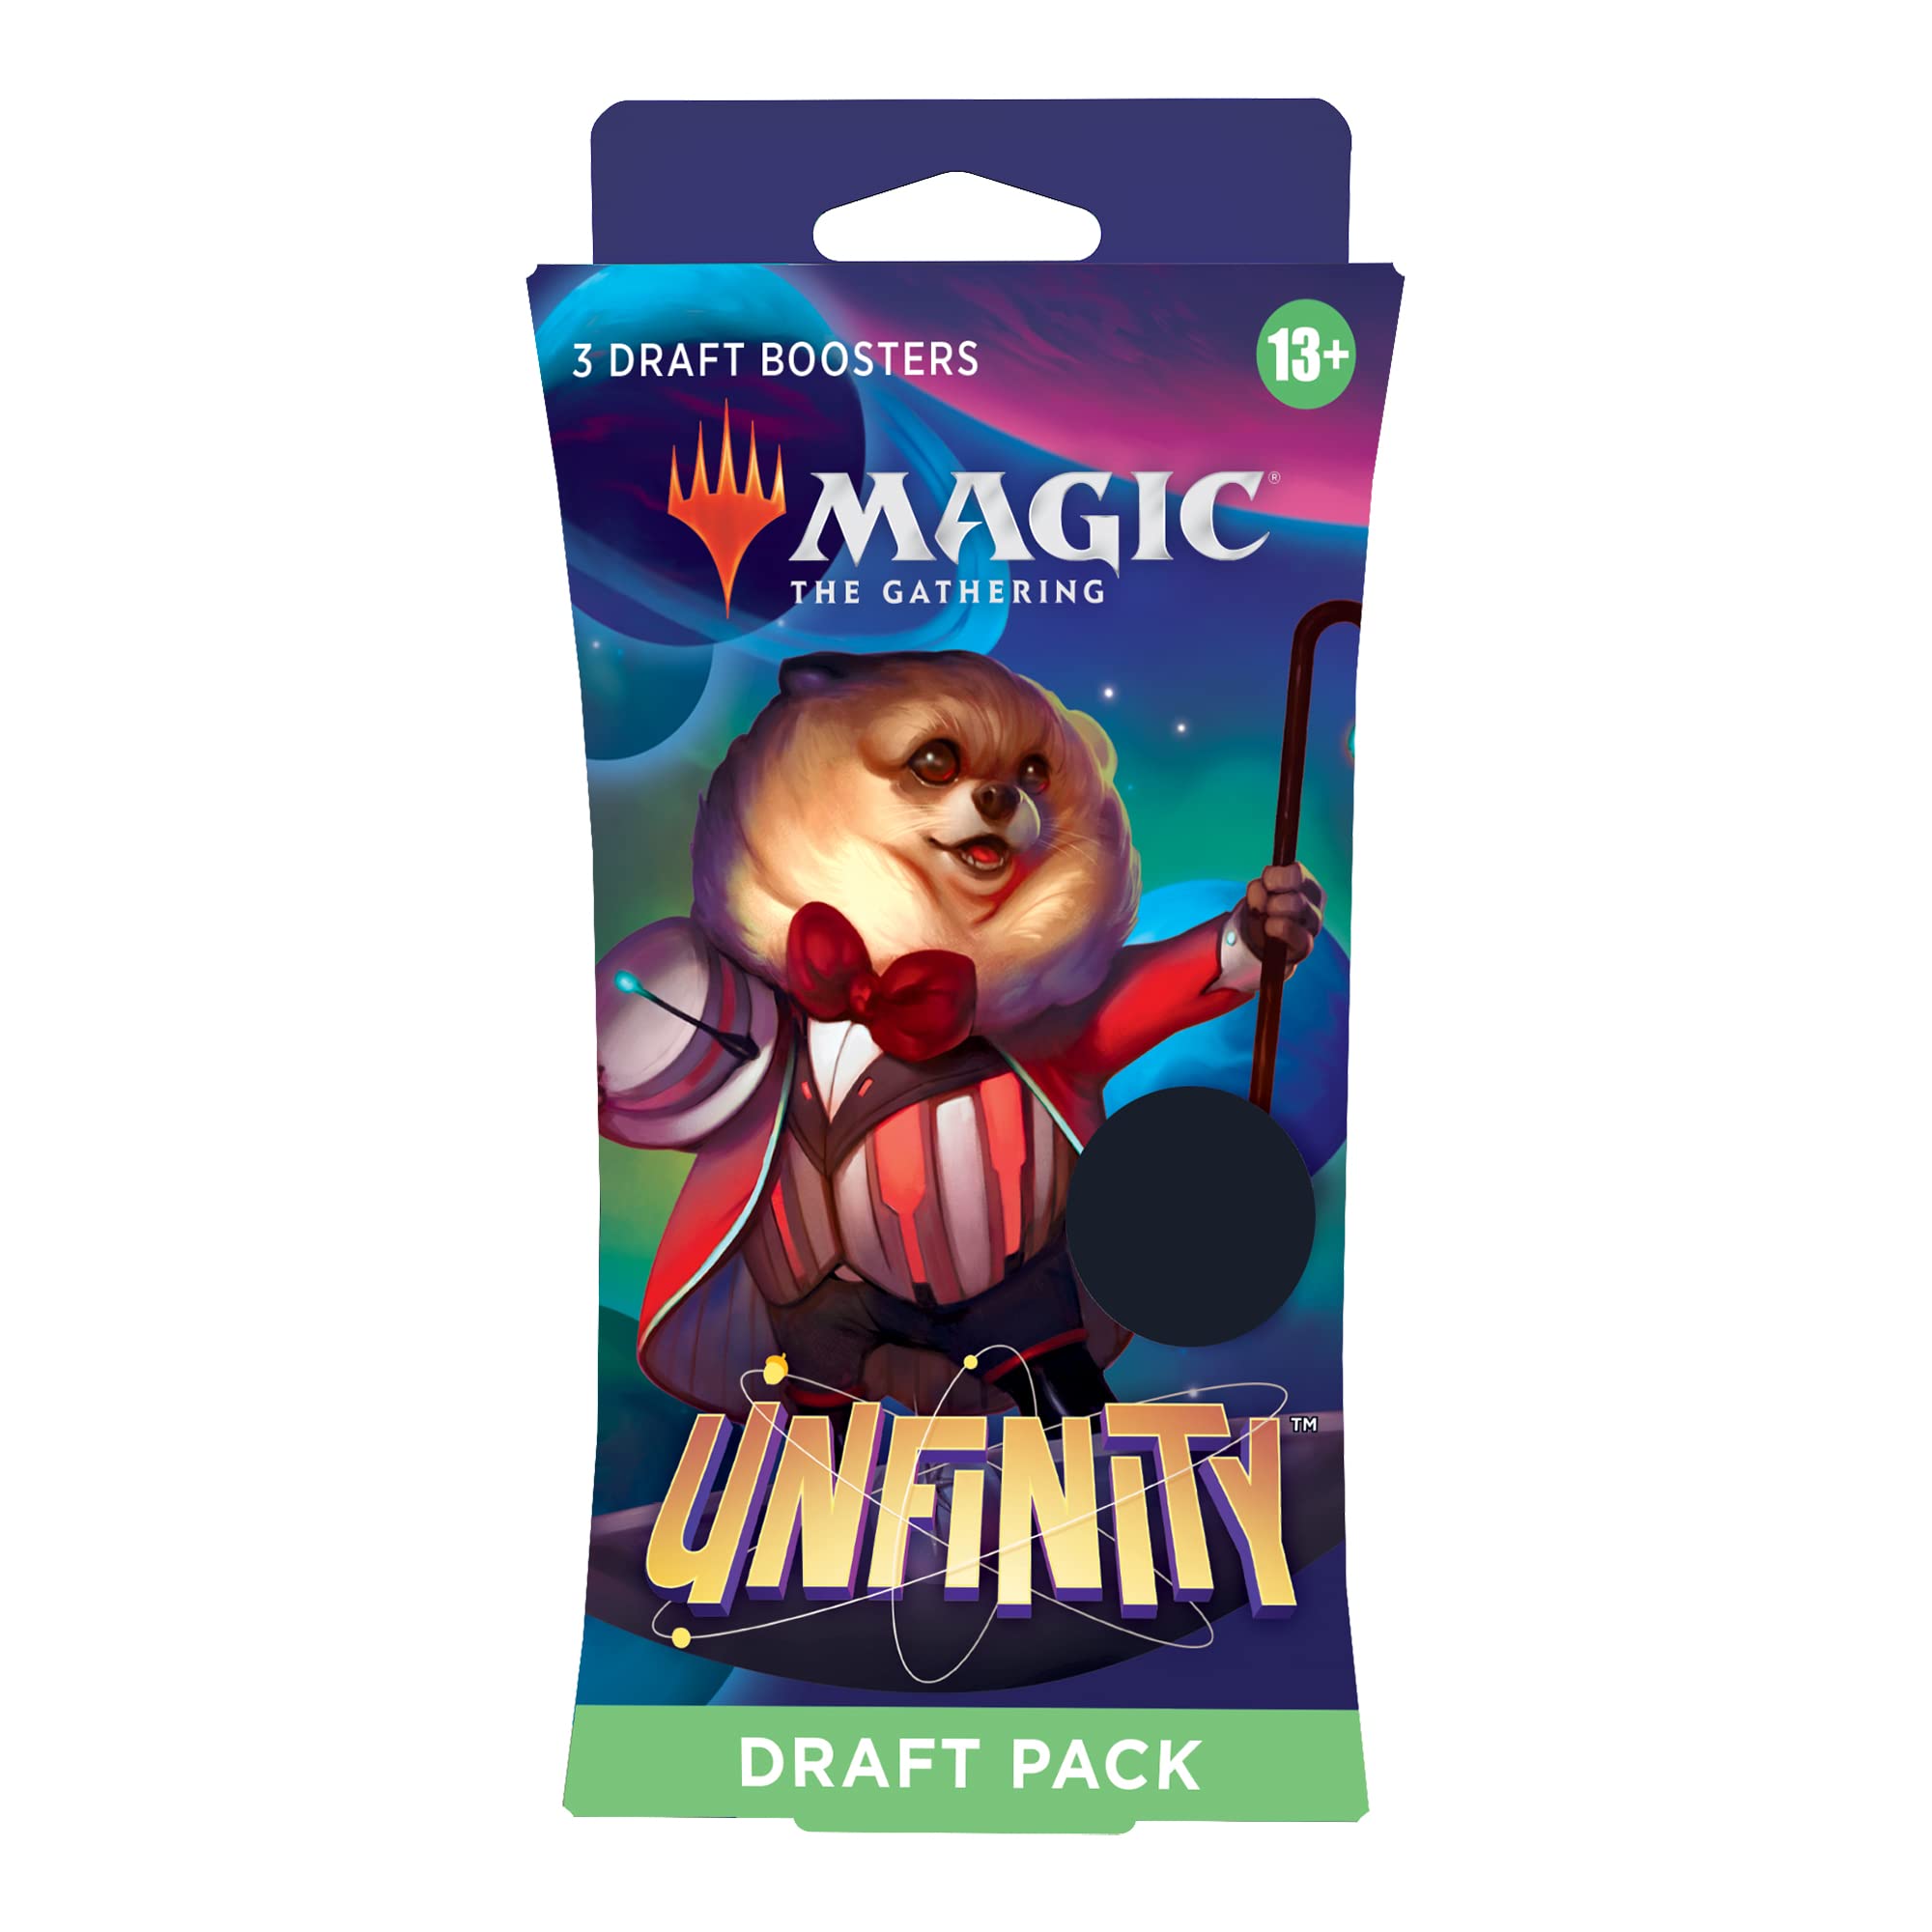 Magic: Unfinity - Draft Booster